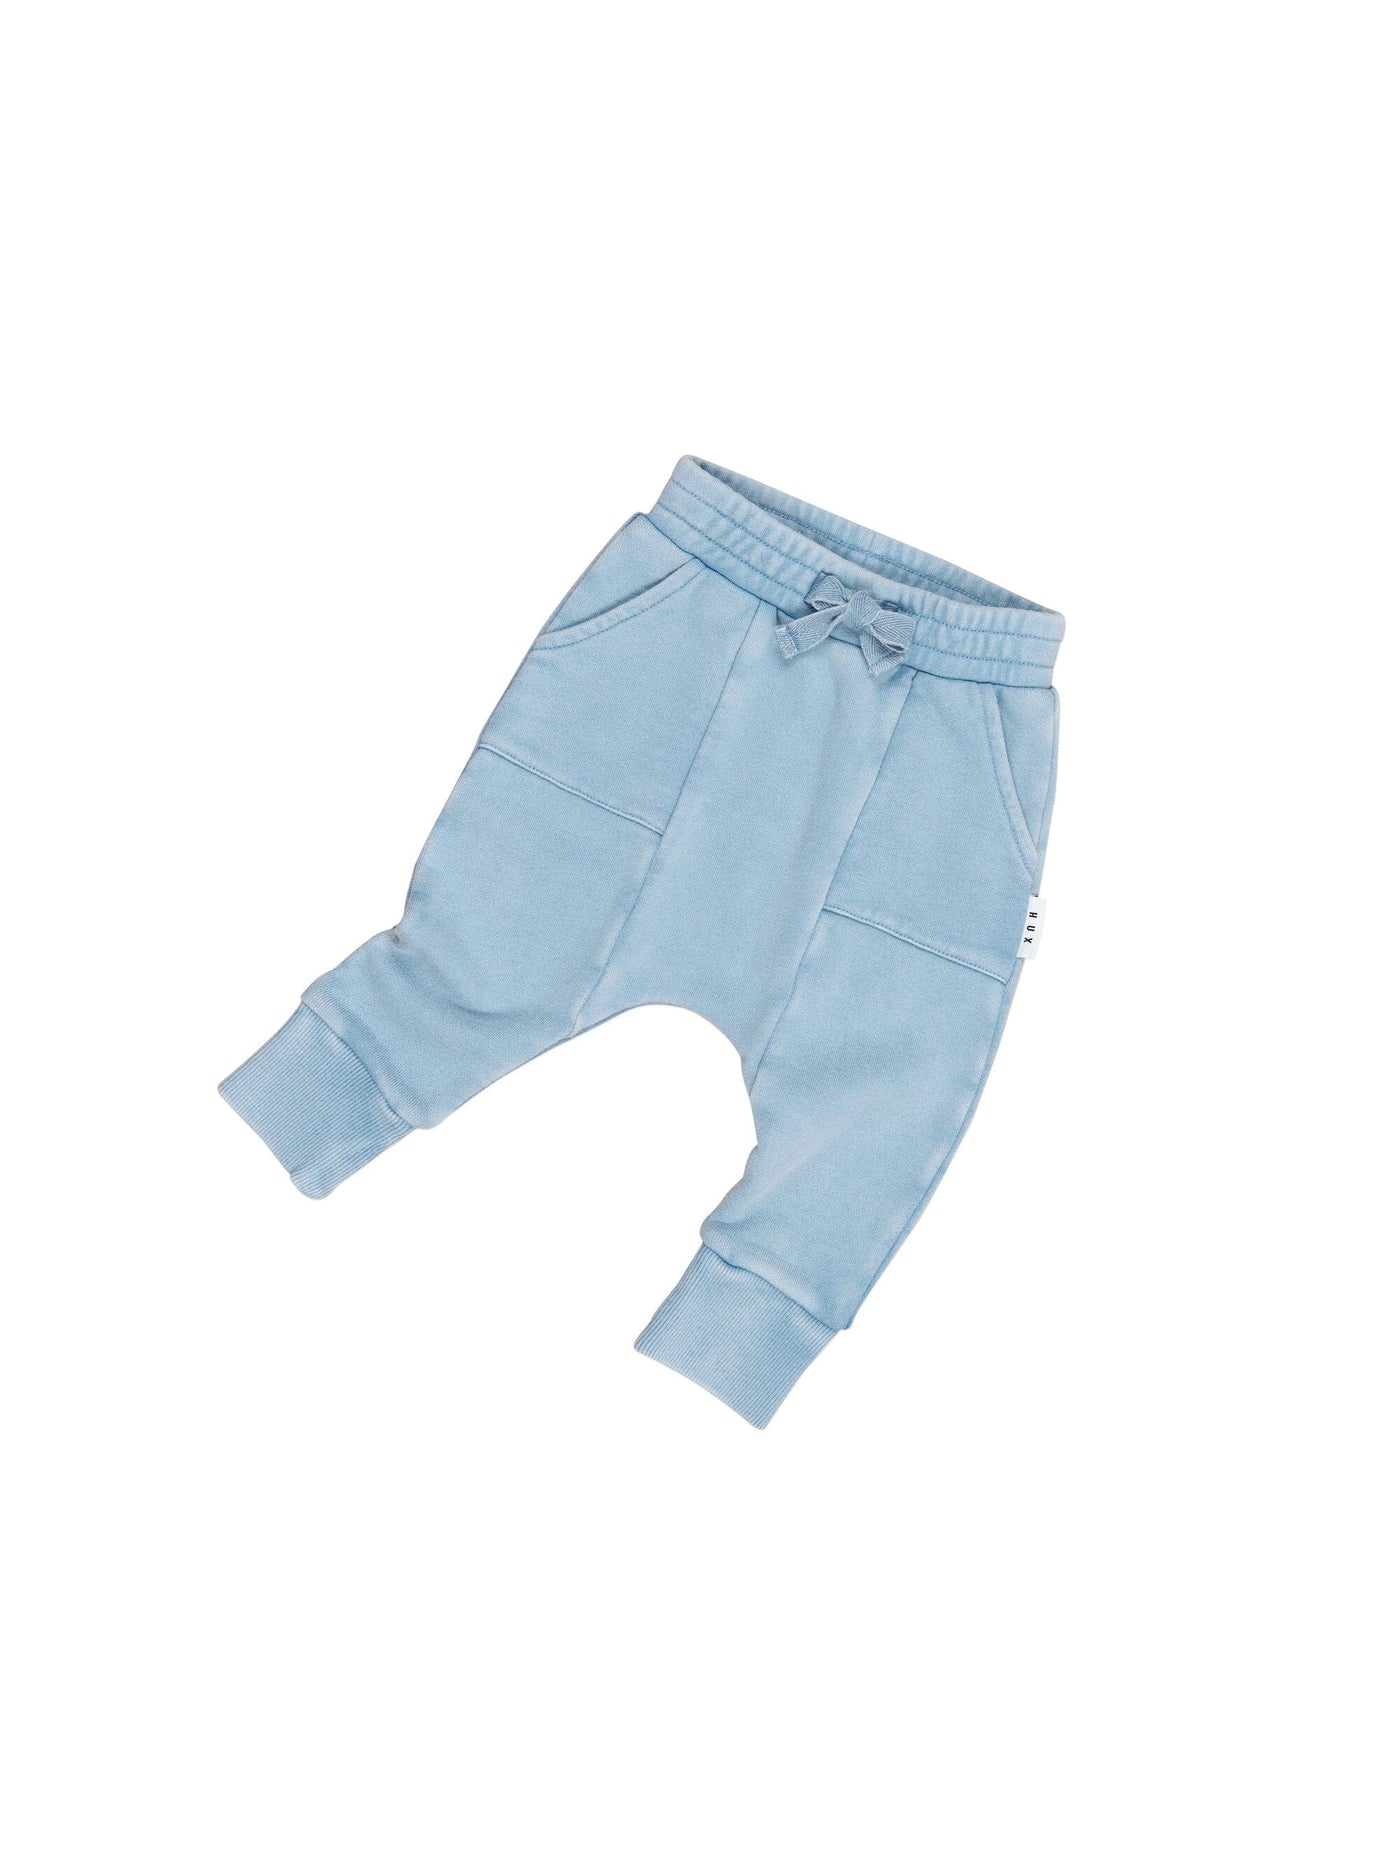 Huxbaby - Vintage Blue Drop Crotch Pant - HB6210W24 Pants Huxbaby 